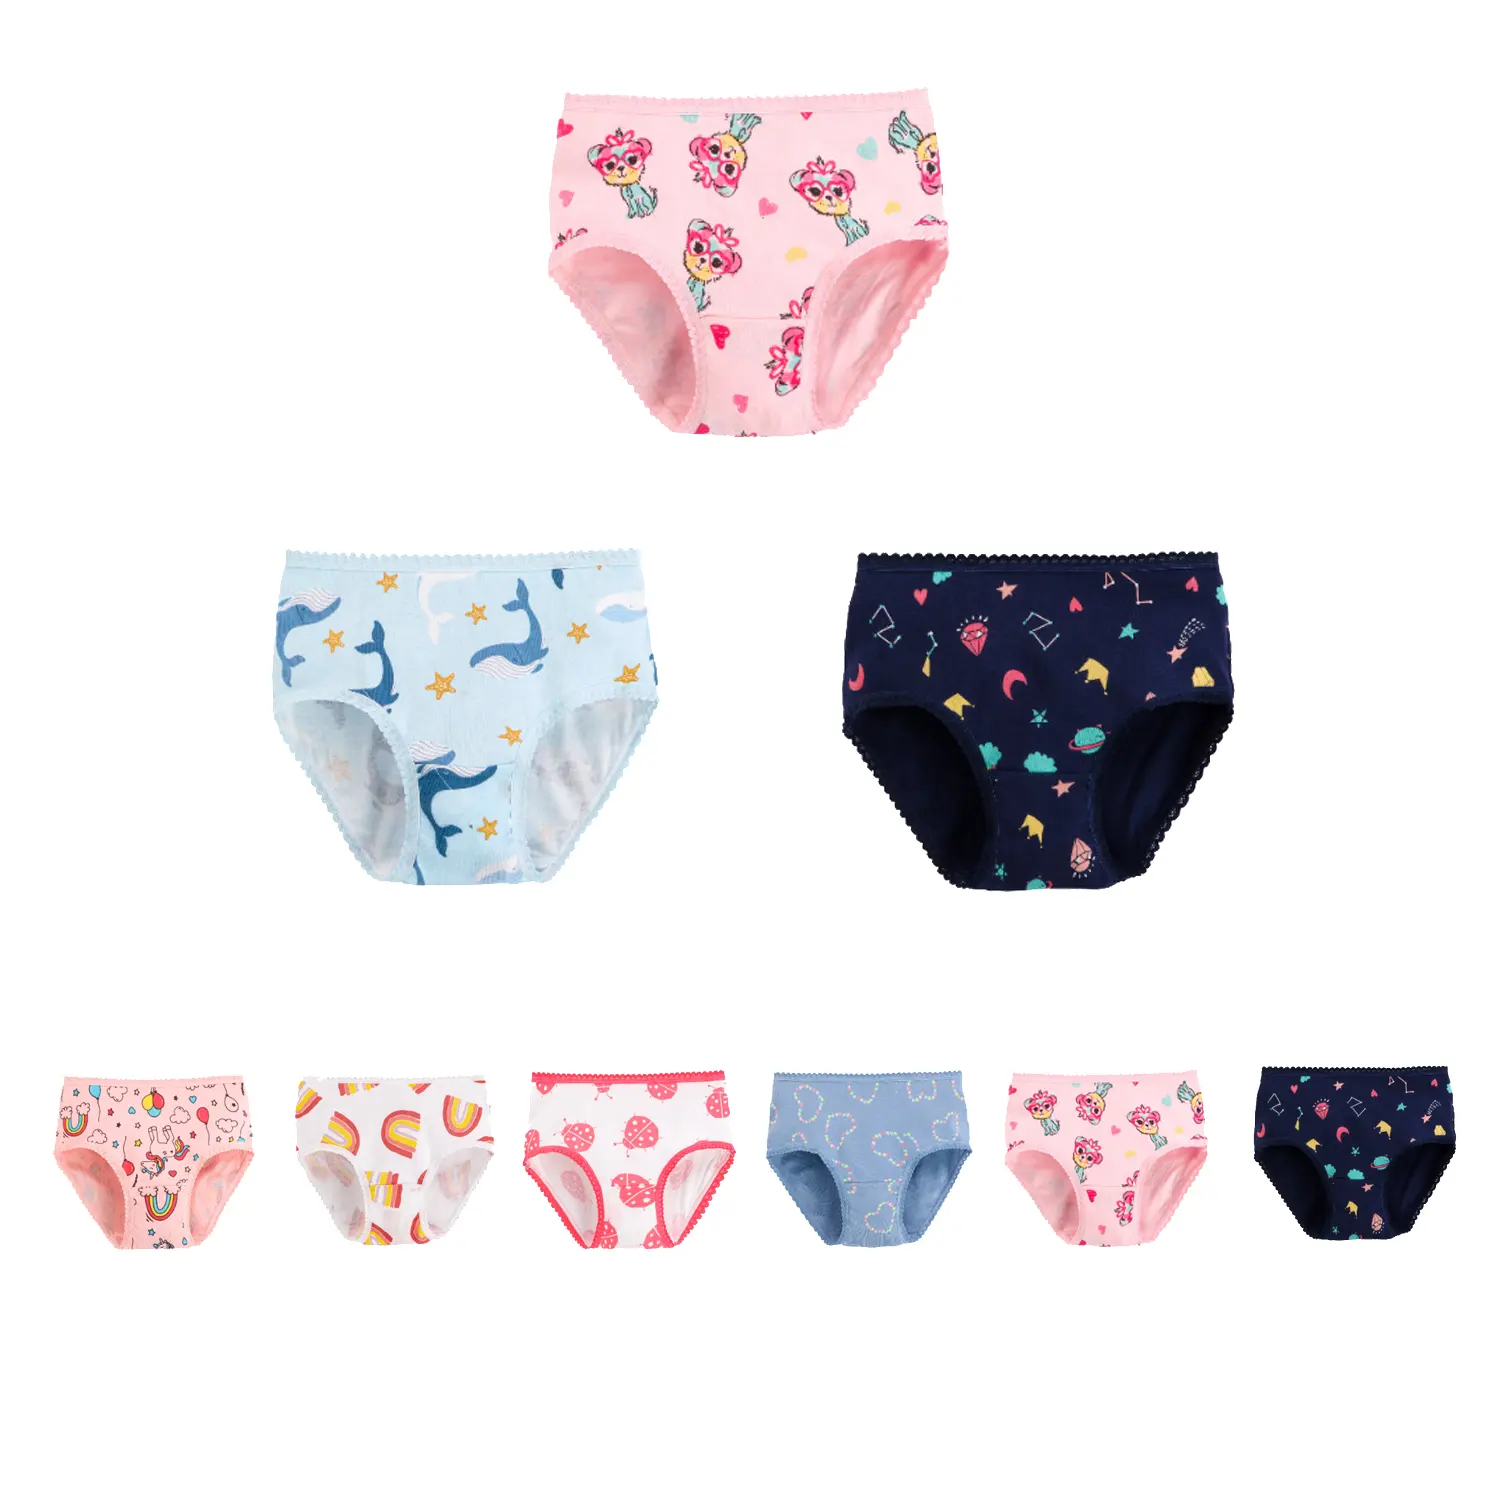 Wholesale/ODM/OEM Girl Cartoon Lace Children's Underwear Cotton Shorts